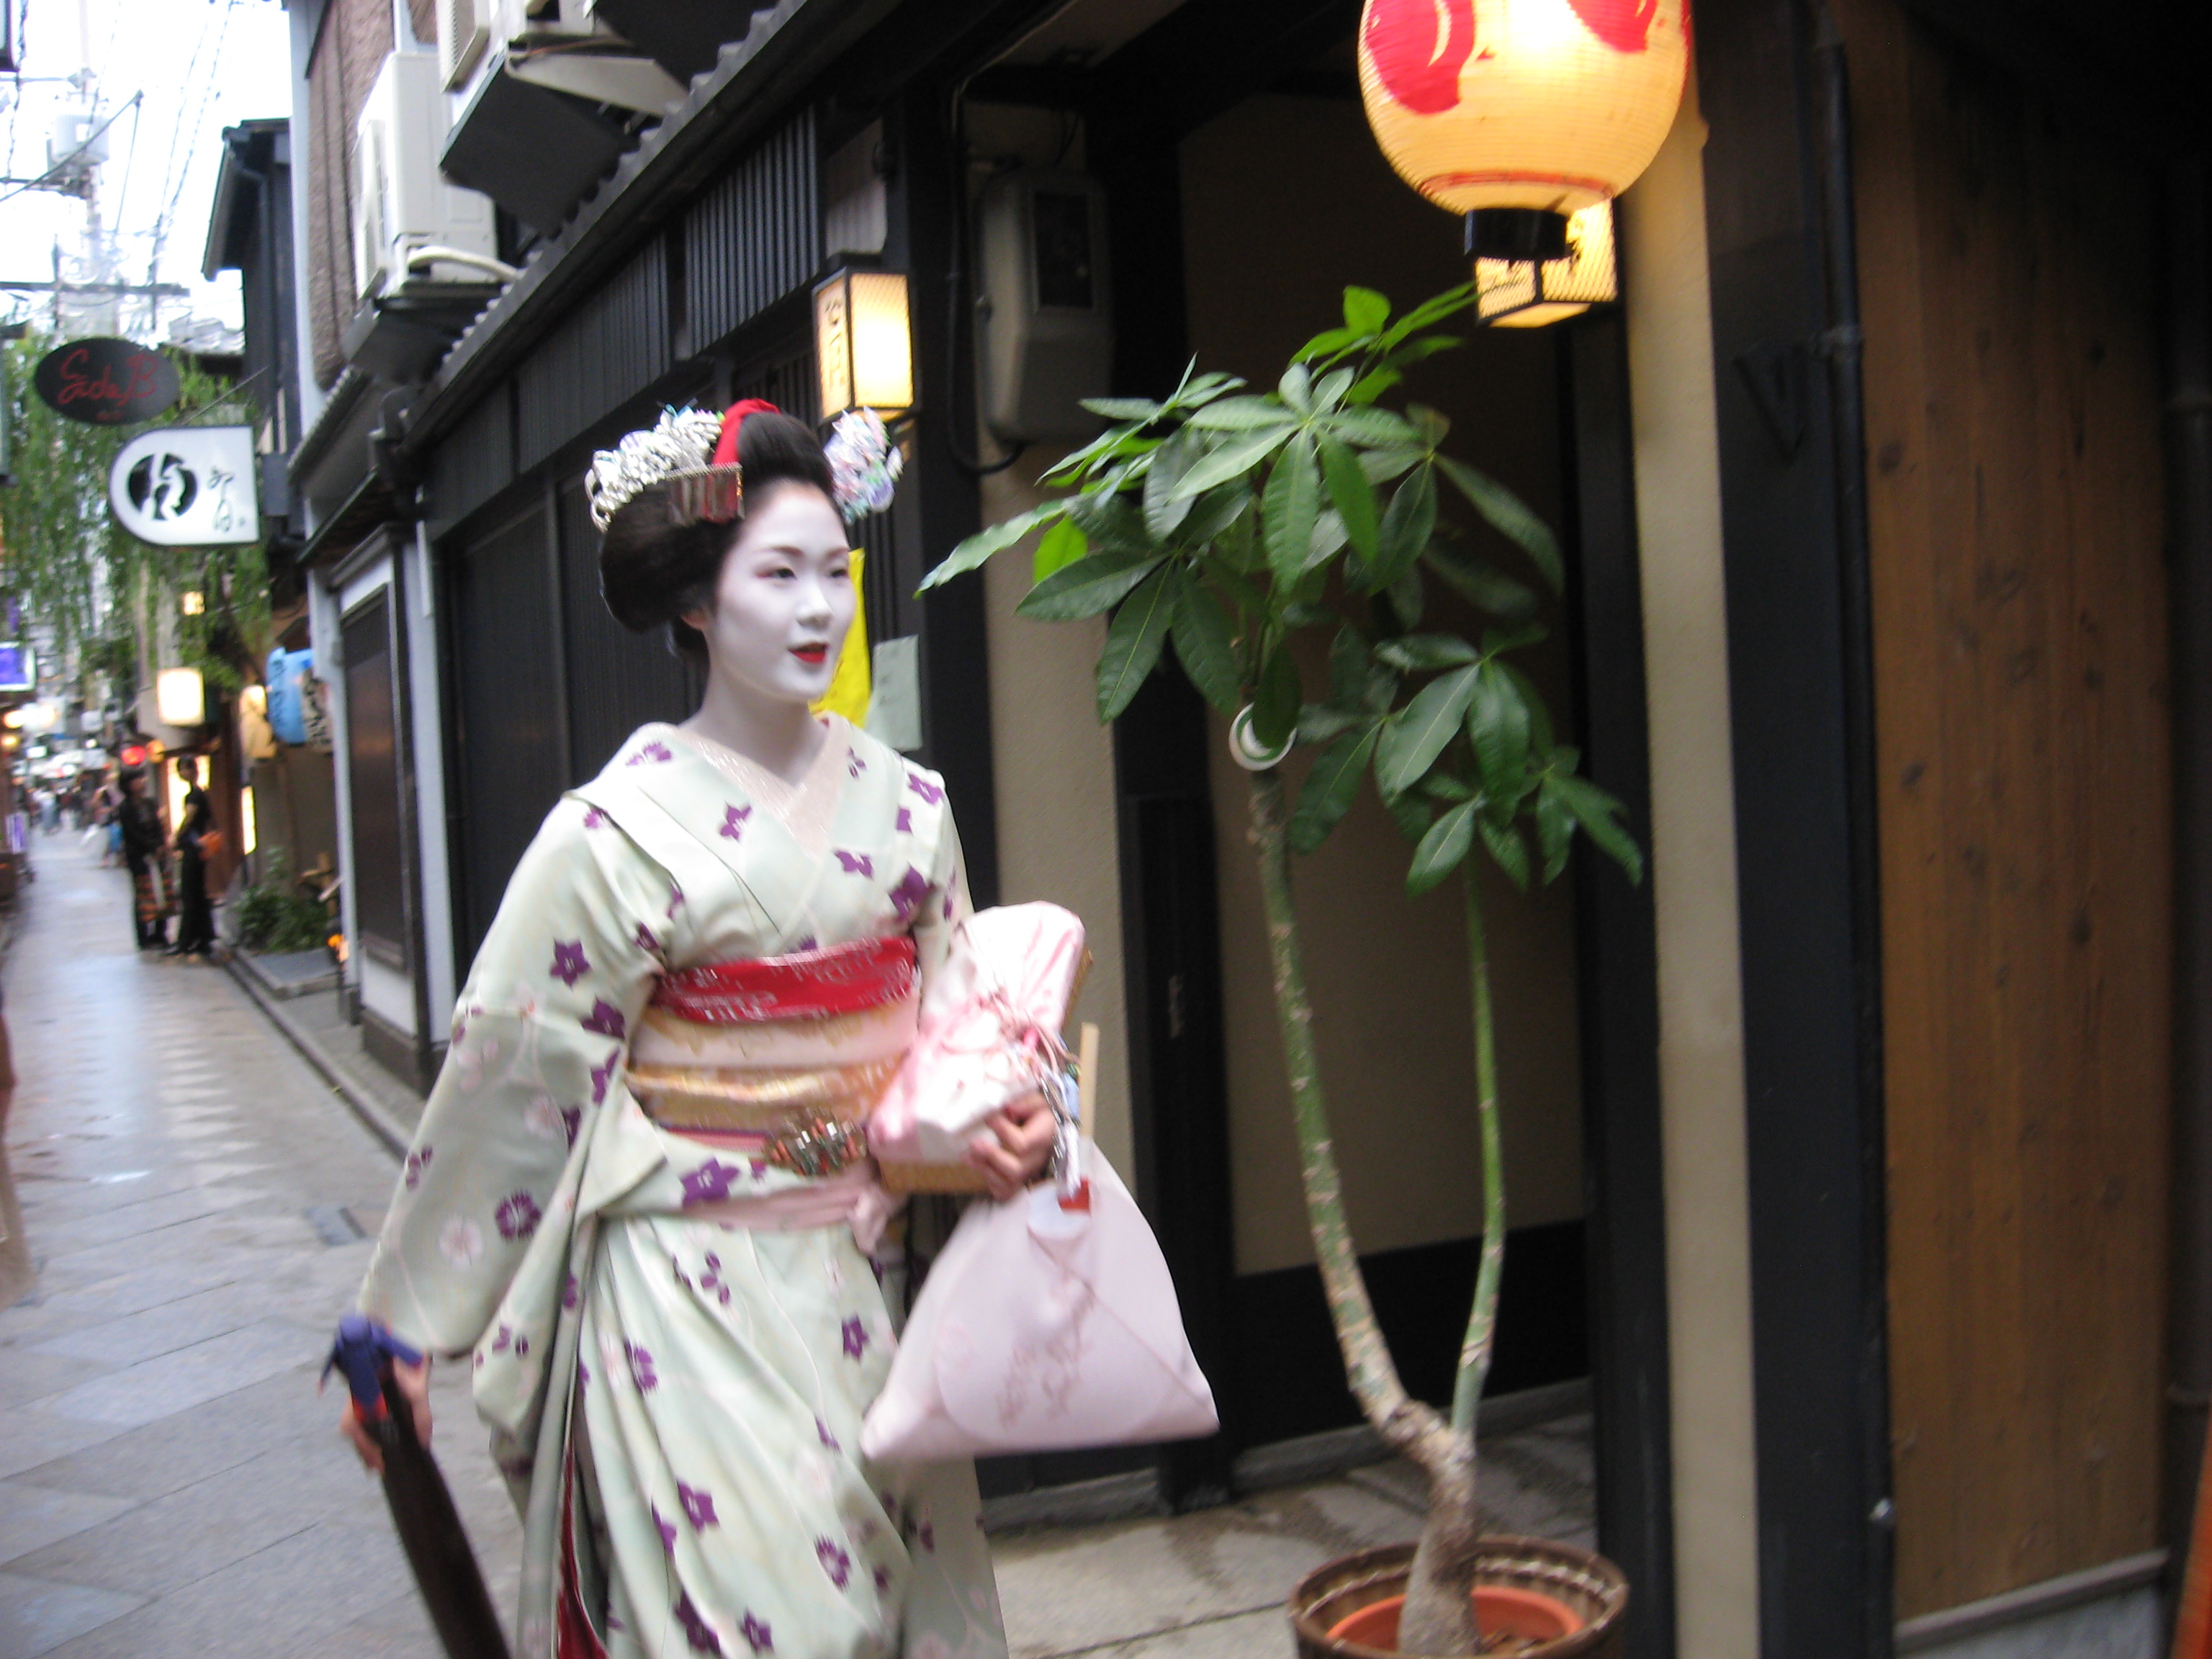 Geisha Dress in Kyoto, Japan 2010 by Tim Jekel